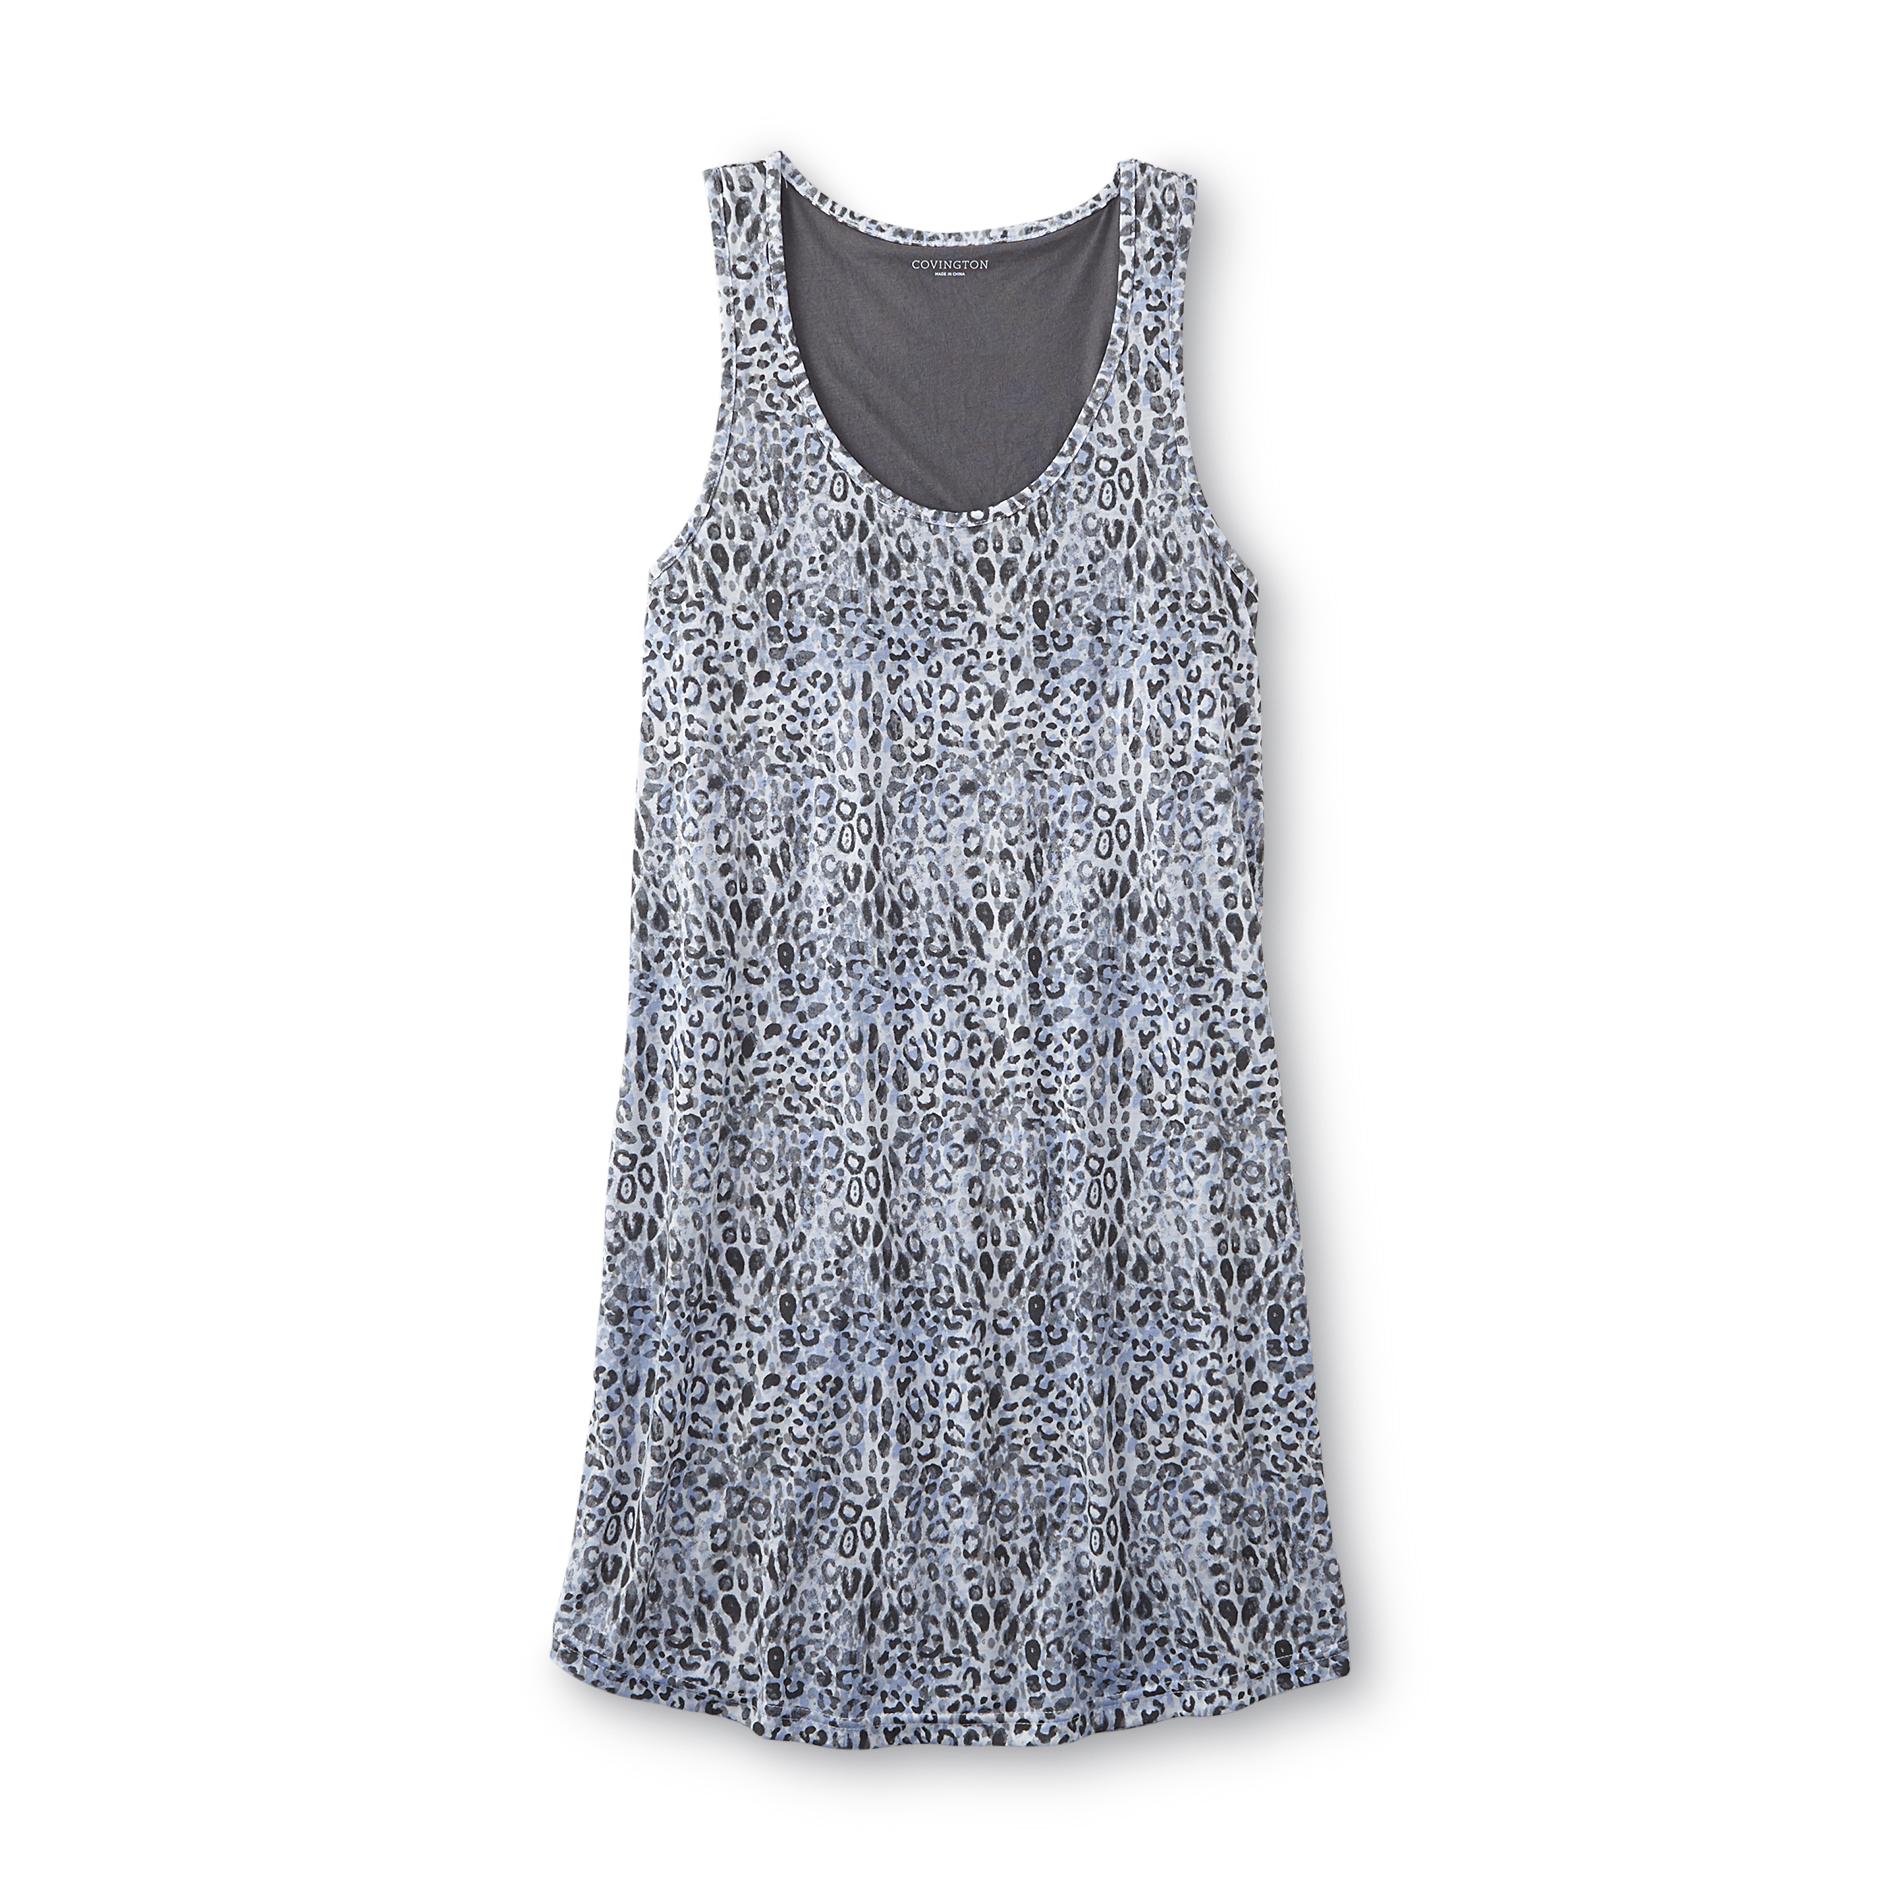 Covington Women's Plus Sleeveless Sleep Shirt - Leopard Print